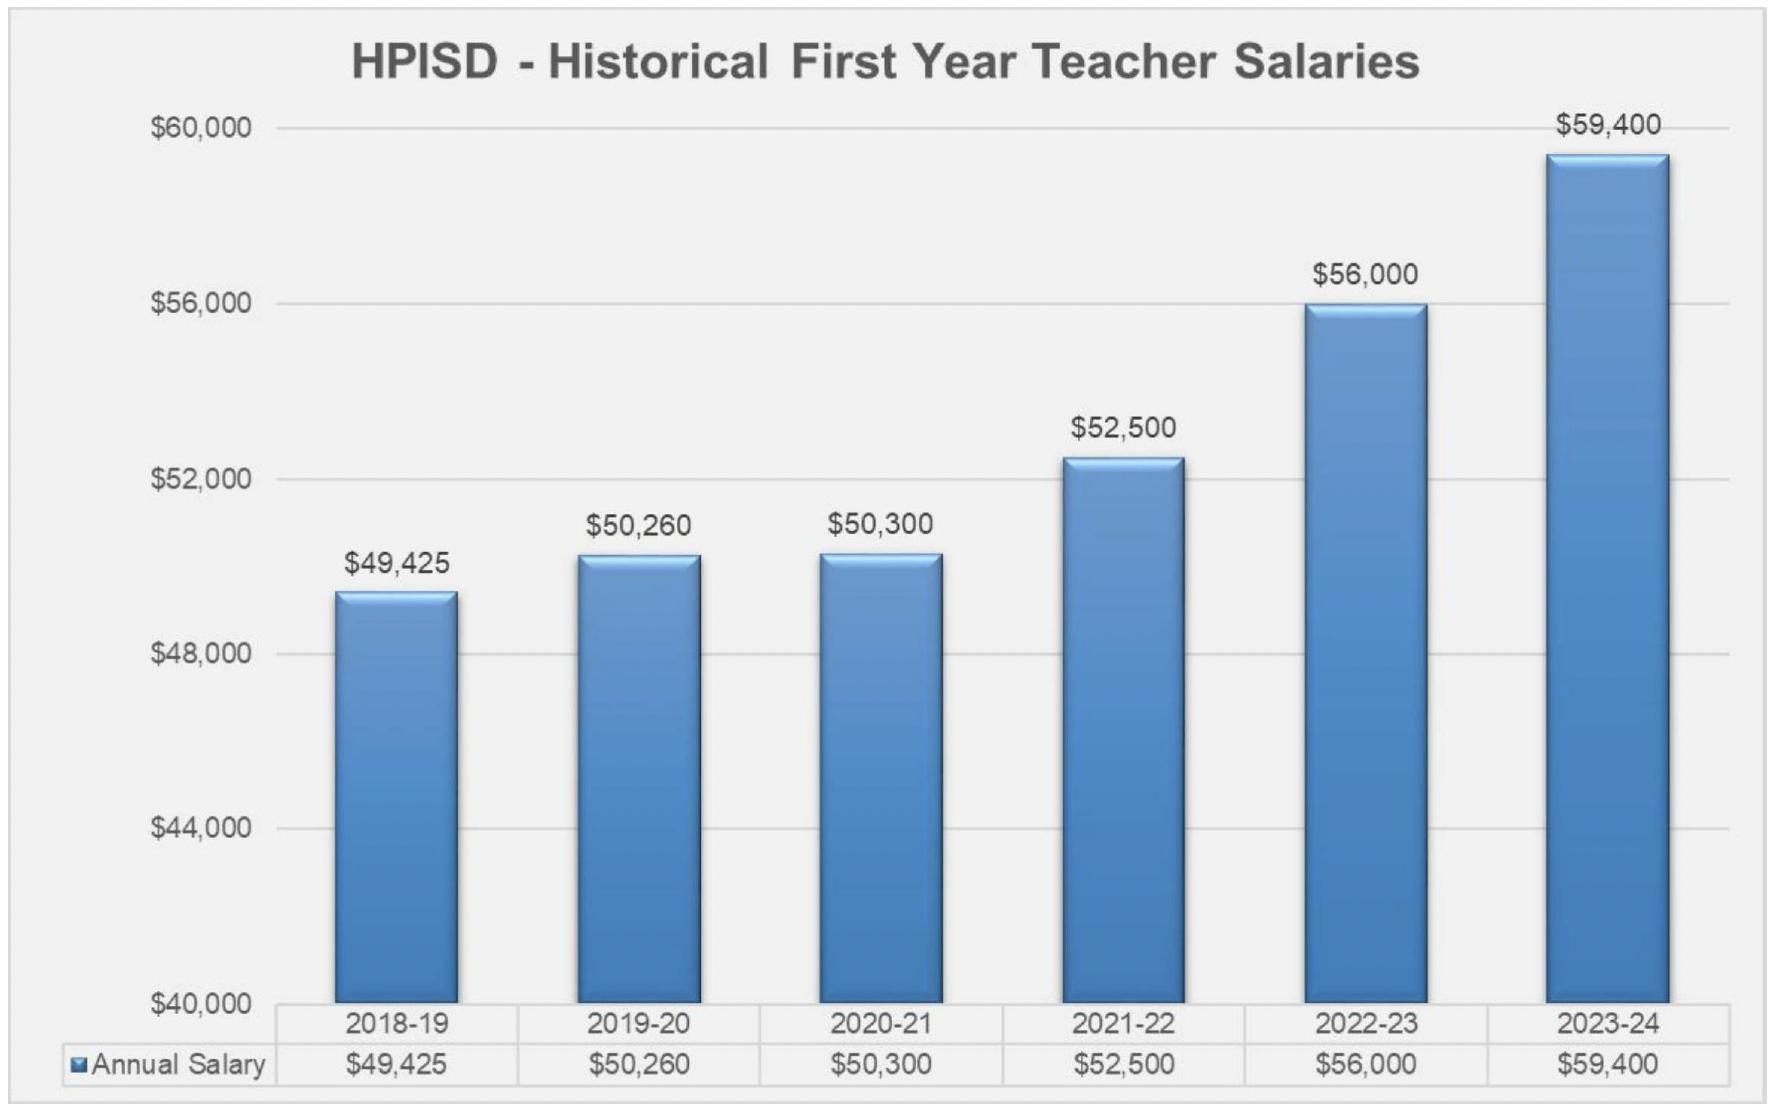 HPISD Historical First Year Teacher Salaries